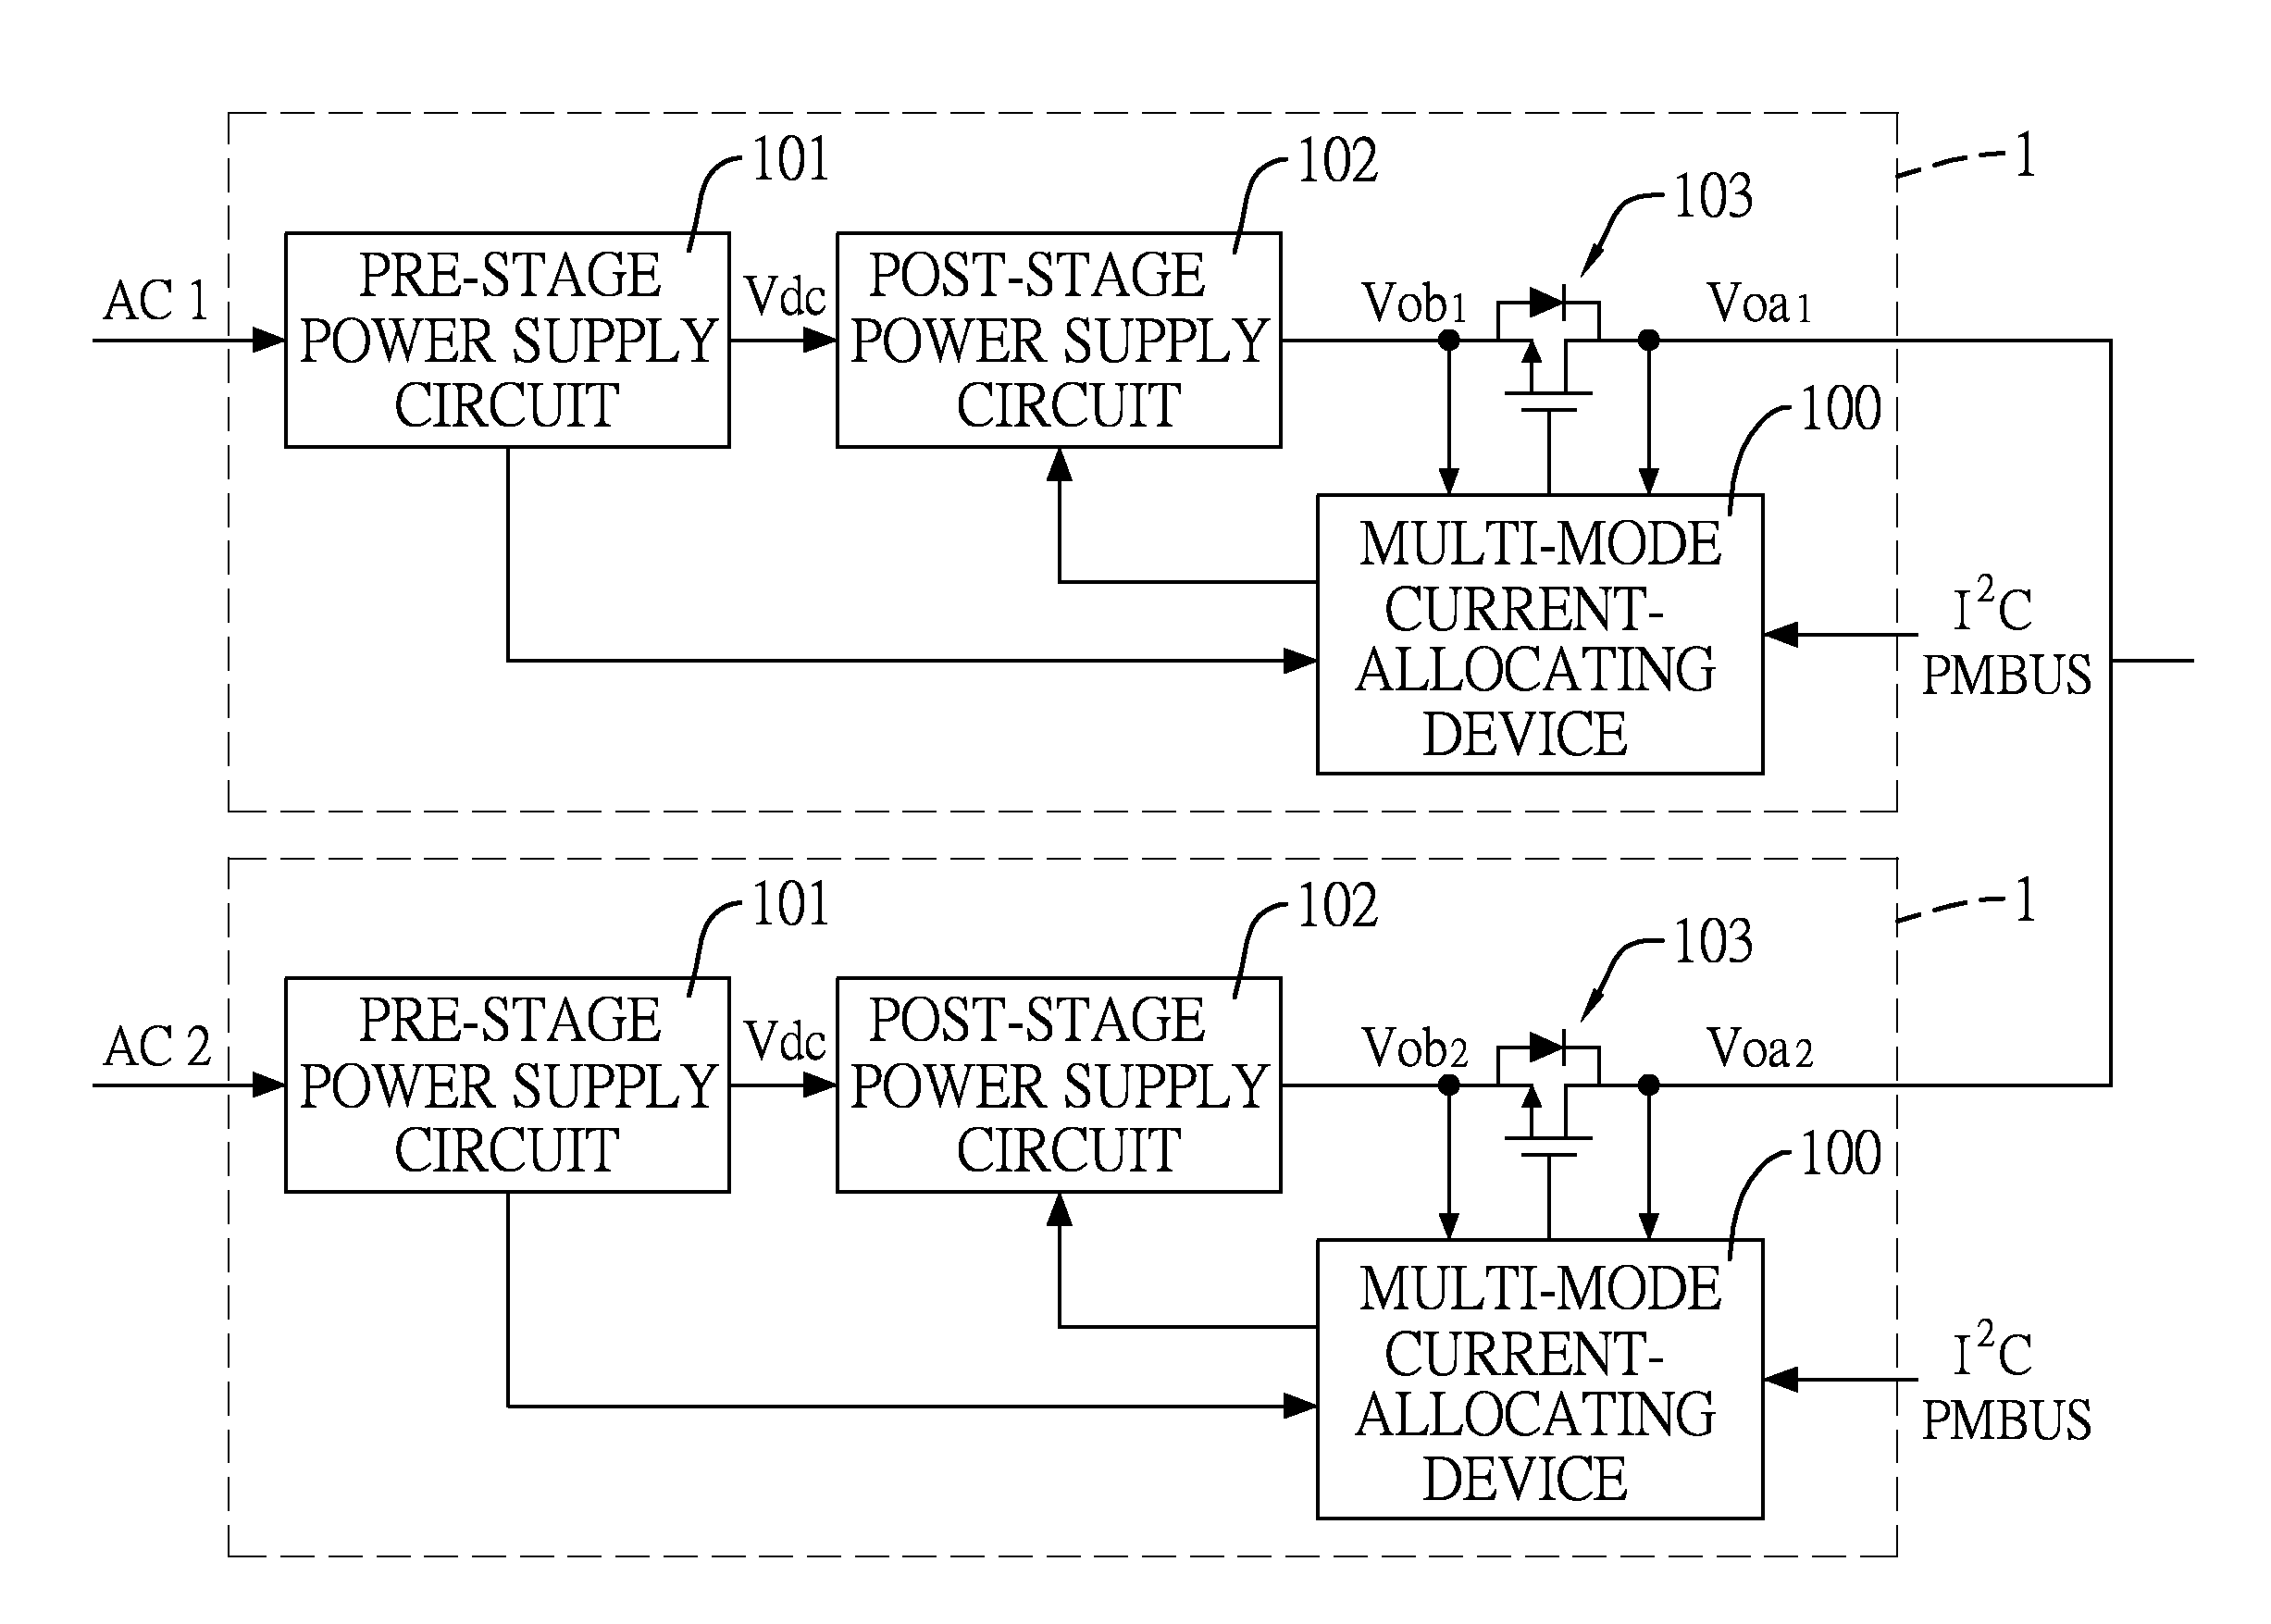 Multi-mode current-allocating device